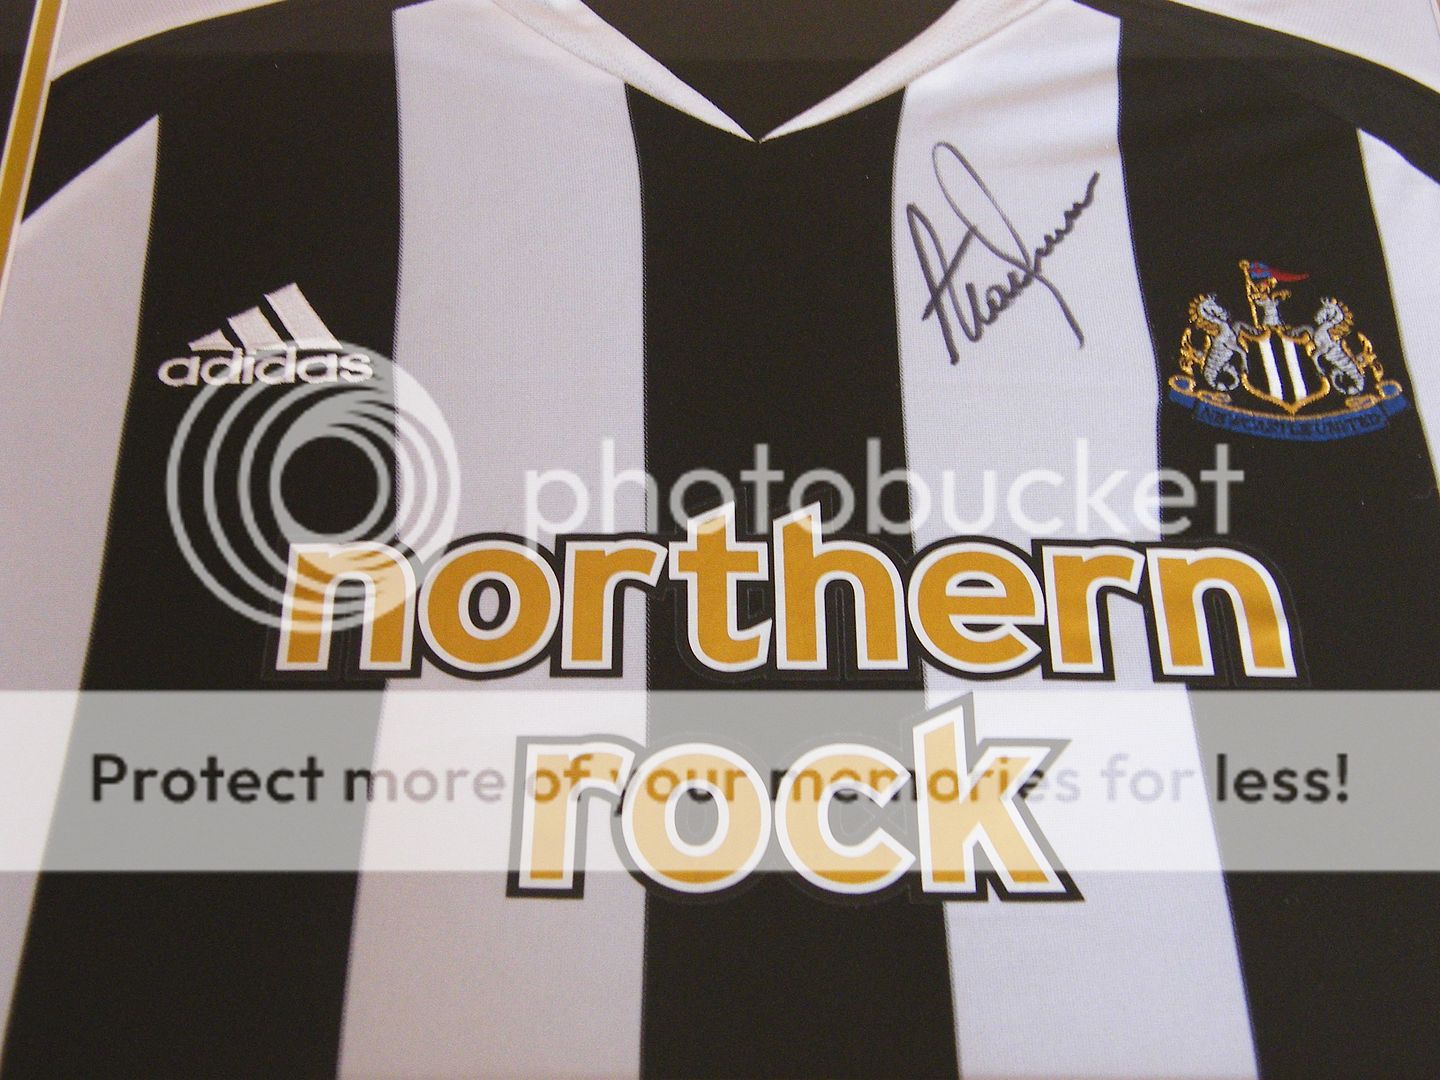 Alan Shearer Genuine Hand Signed Framed Newcastle United Shirt 